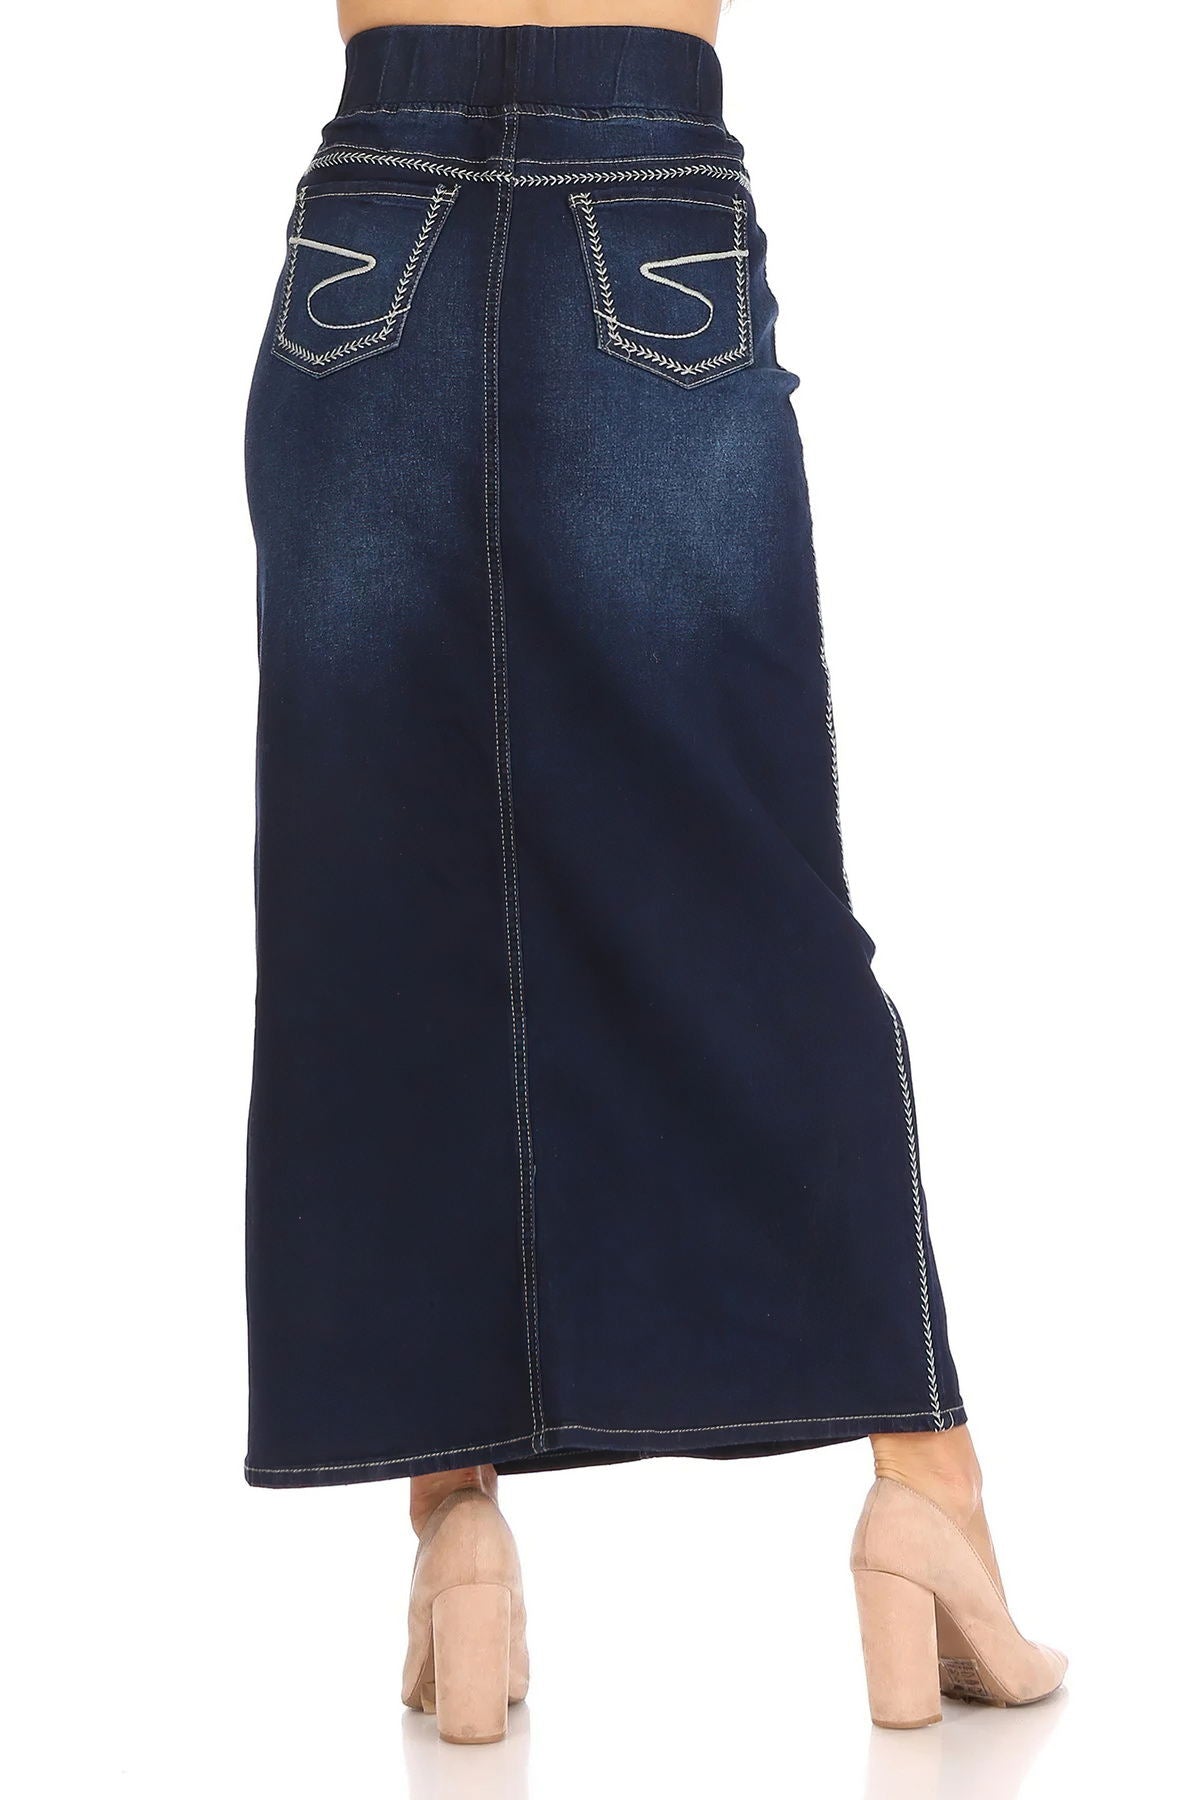 Women's Juniors/Plus Size Stretch Denim Long Skirt with Elastic 